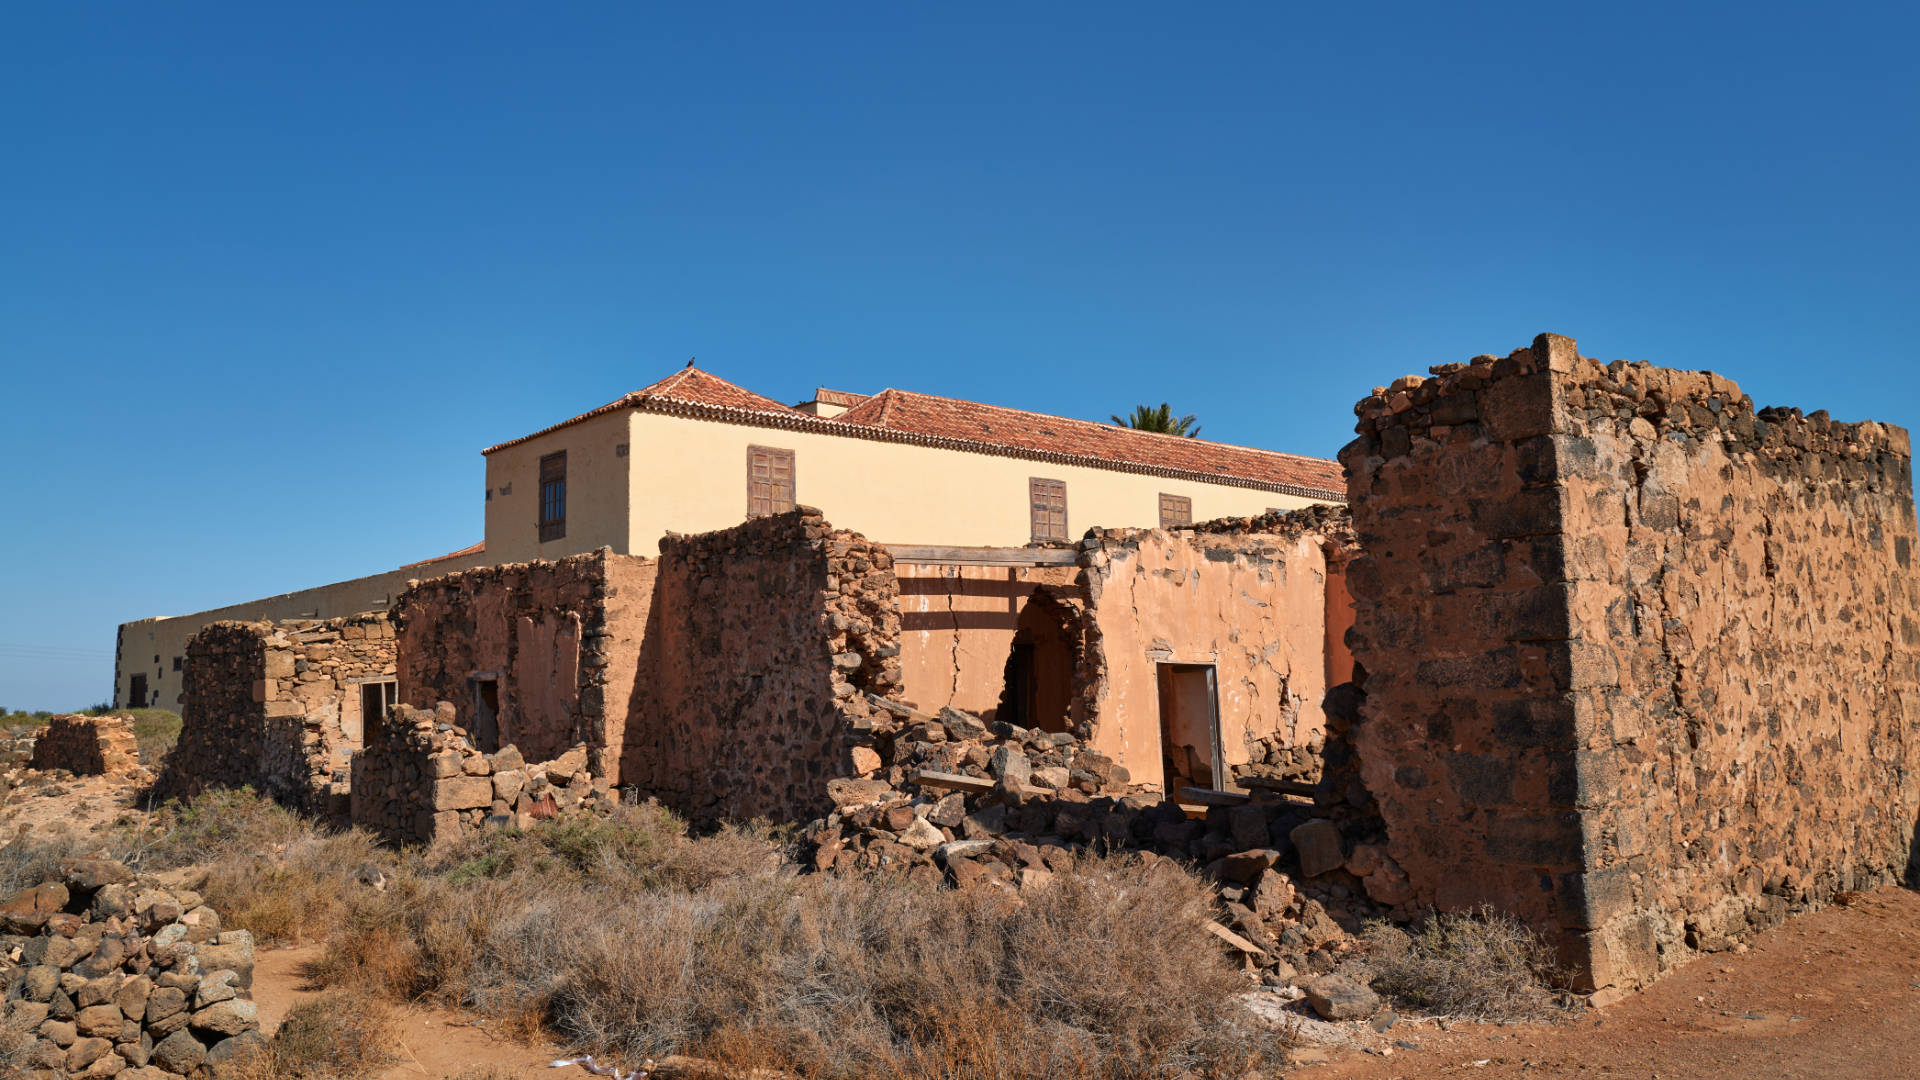 Casa de los Coroneles La Oliva Fuerteventura.